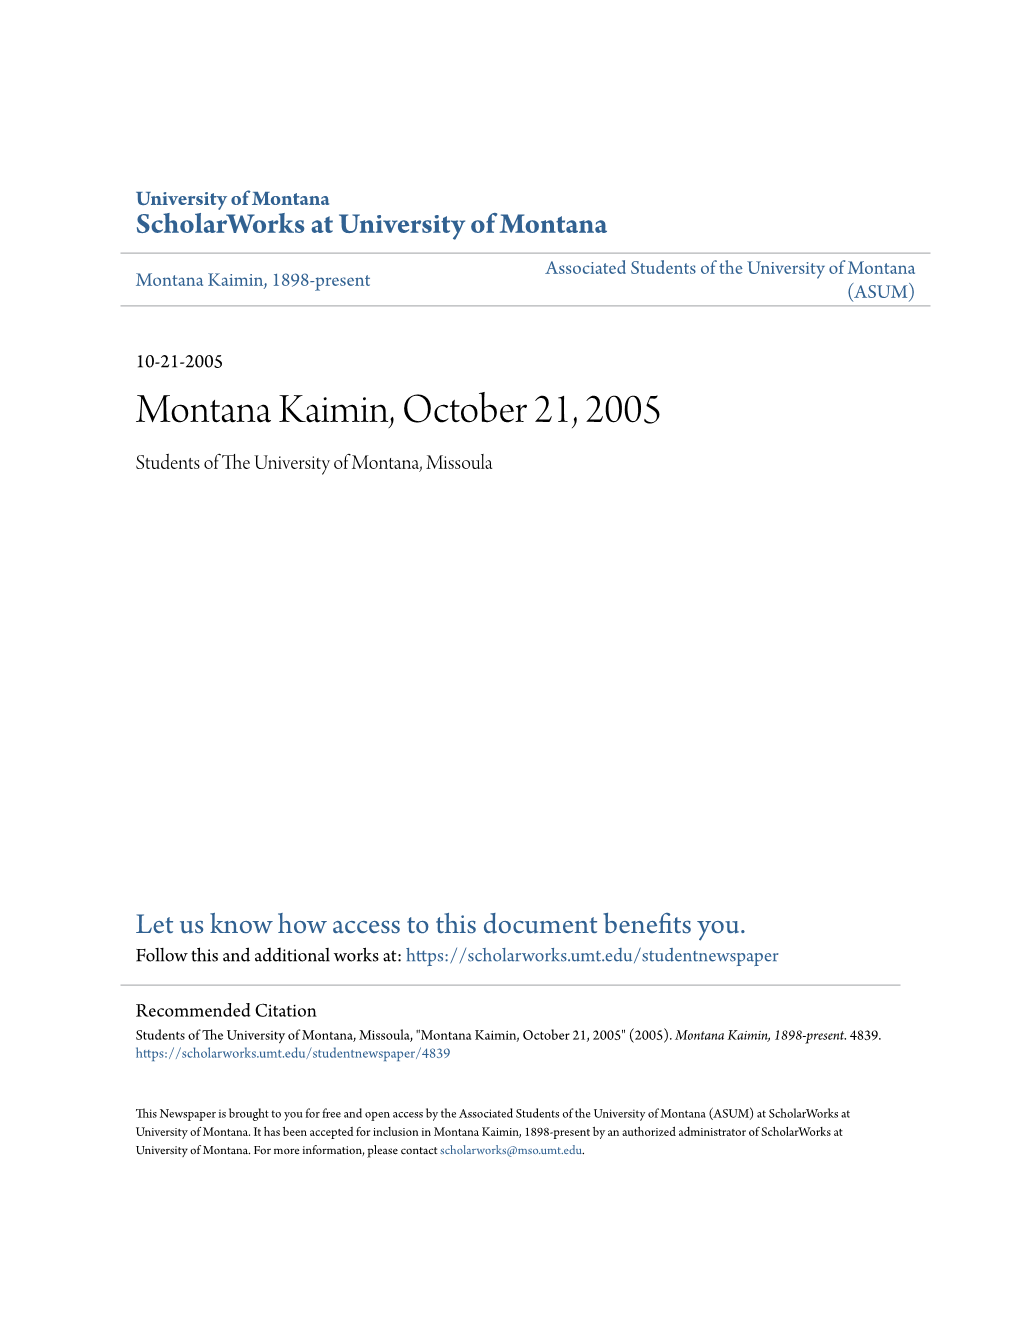 Montana Kaimin, October 21, 2005 Students of the Niu Versity of Montana, Missoula